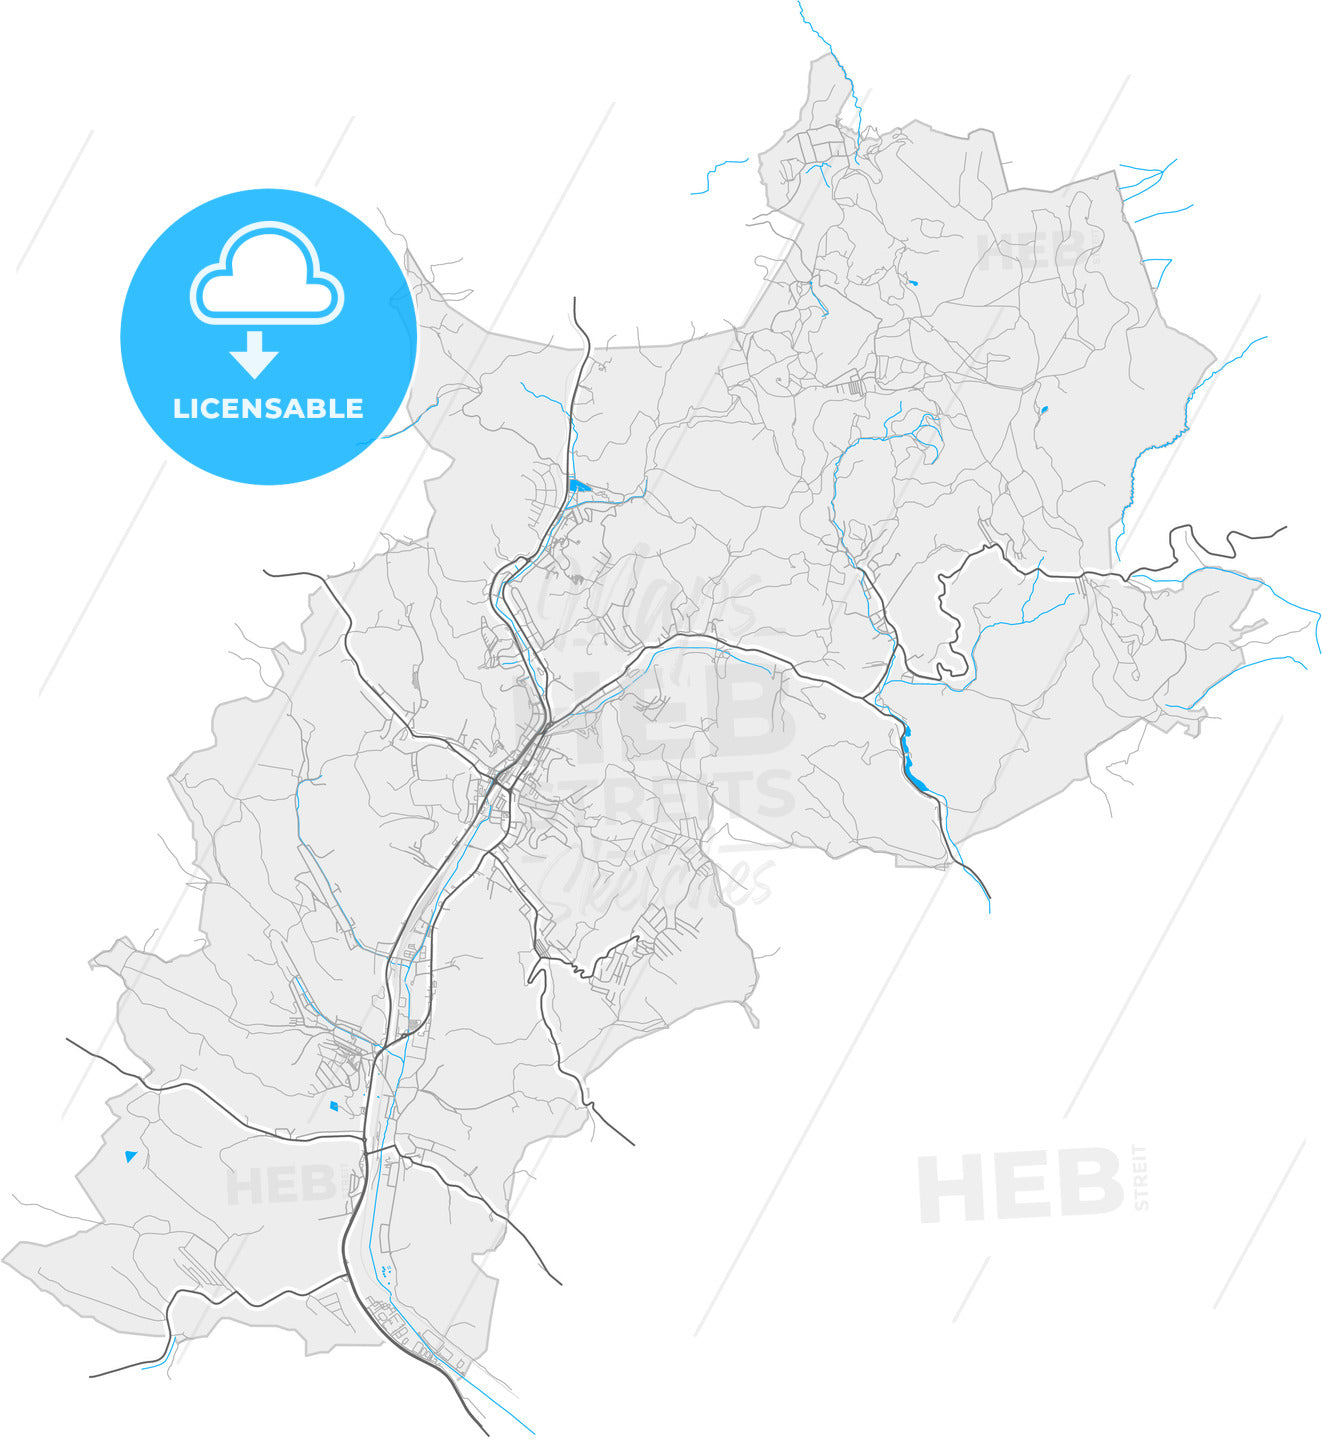 Salgótarján, Nógrád, Hungary, high quality vector map